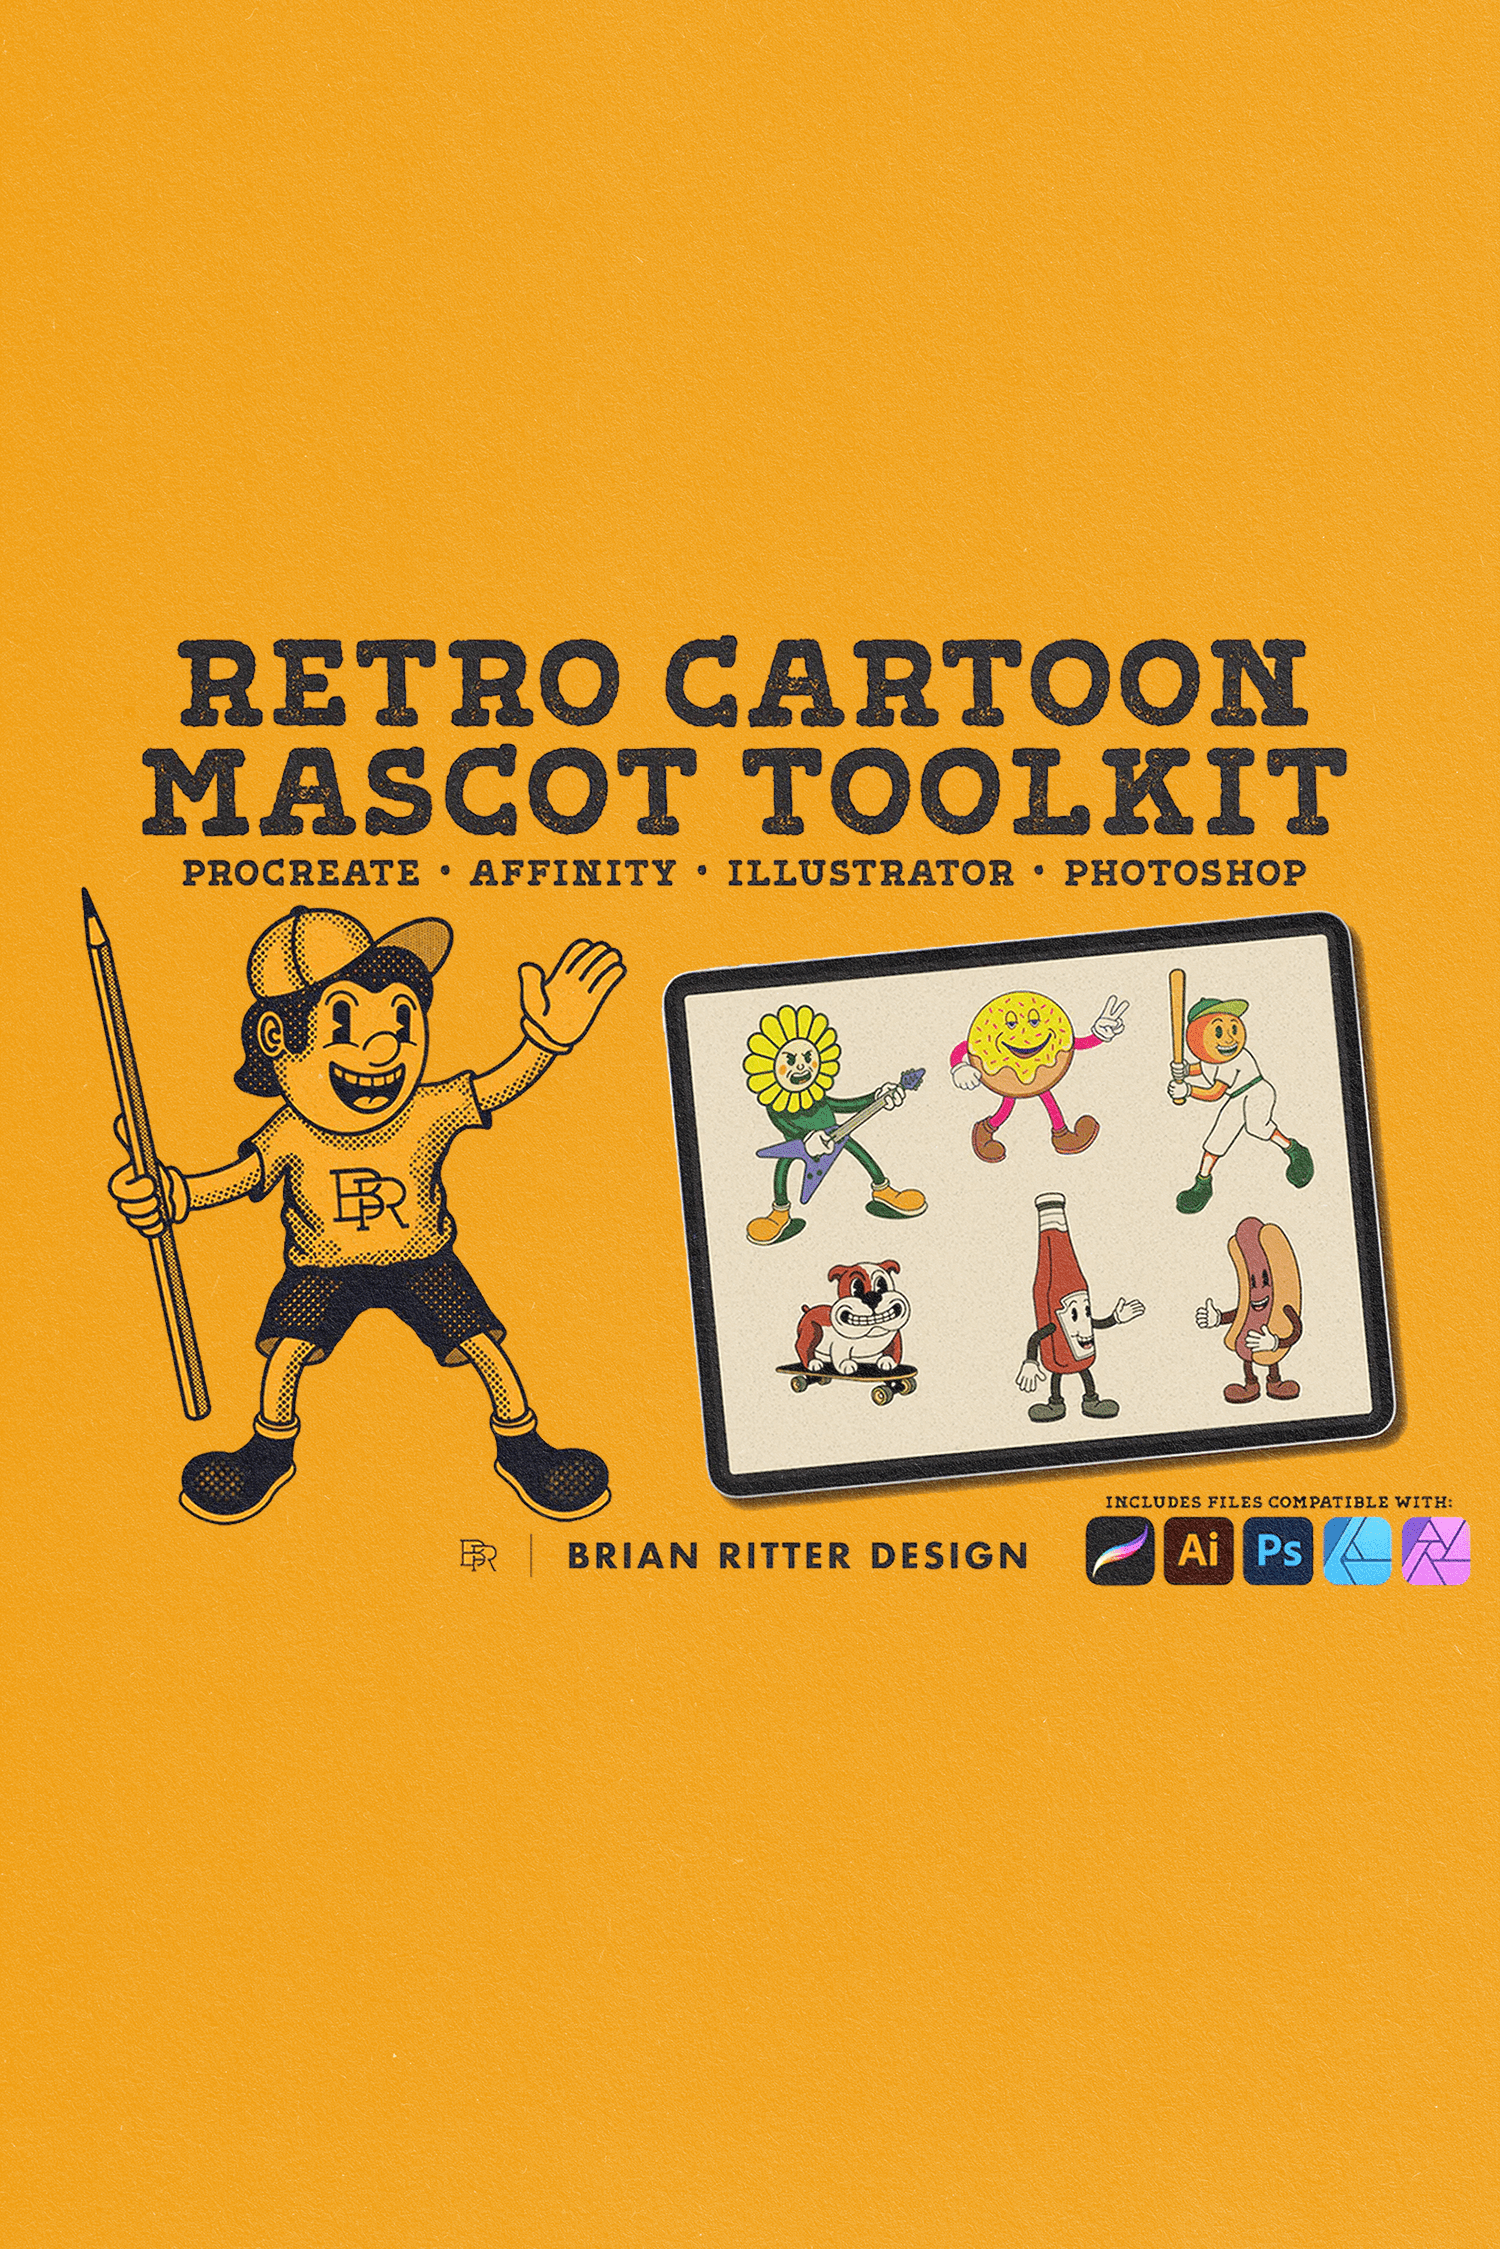 Retro Cartoon Mascot Toolkit by Brian Ritter Design